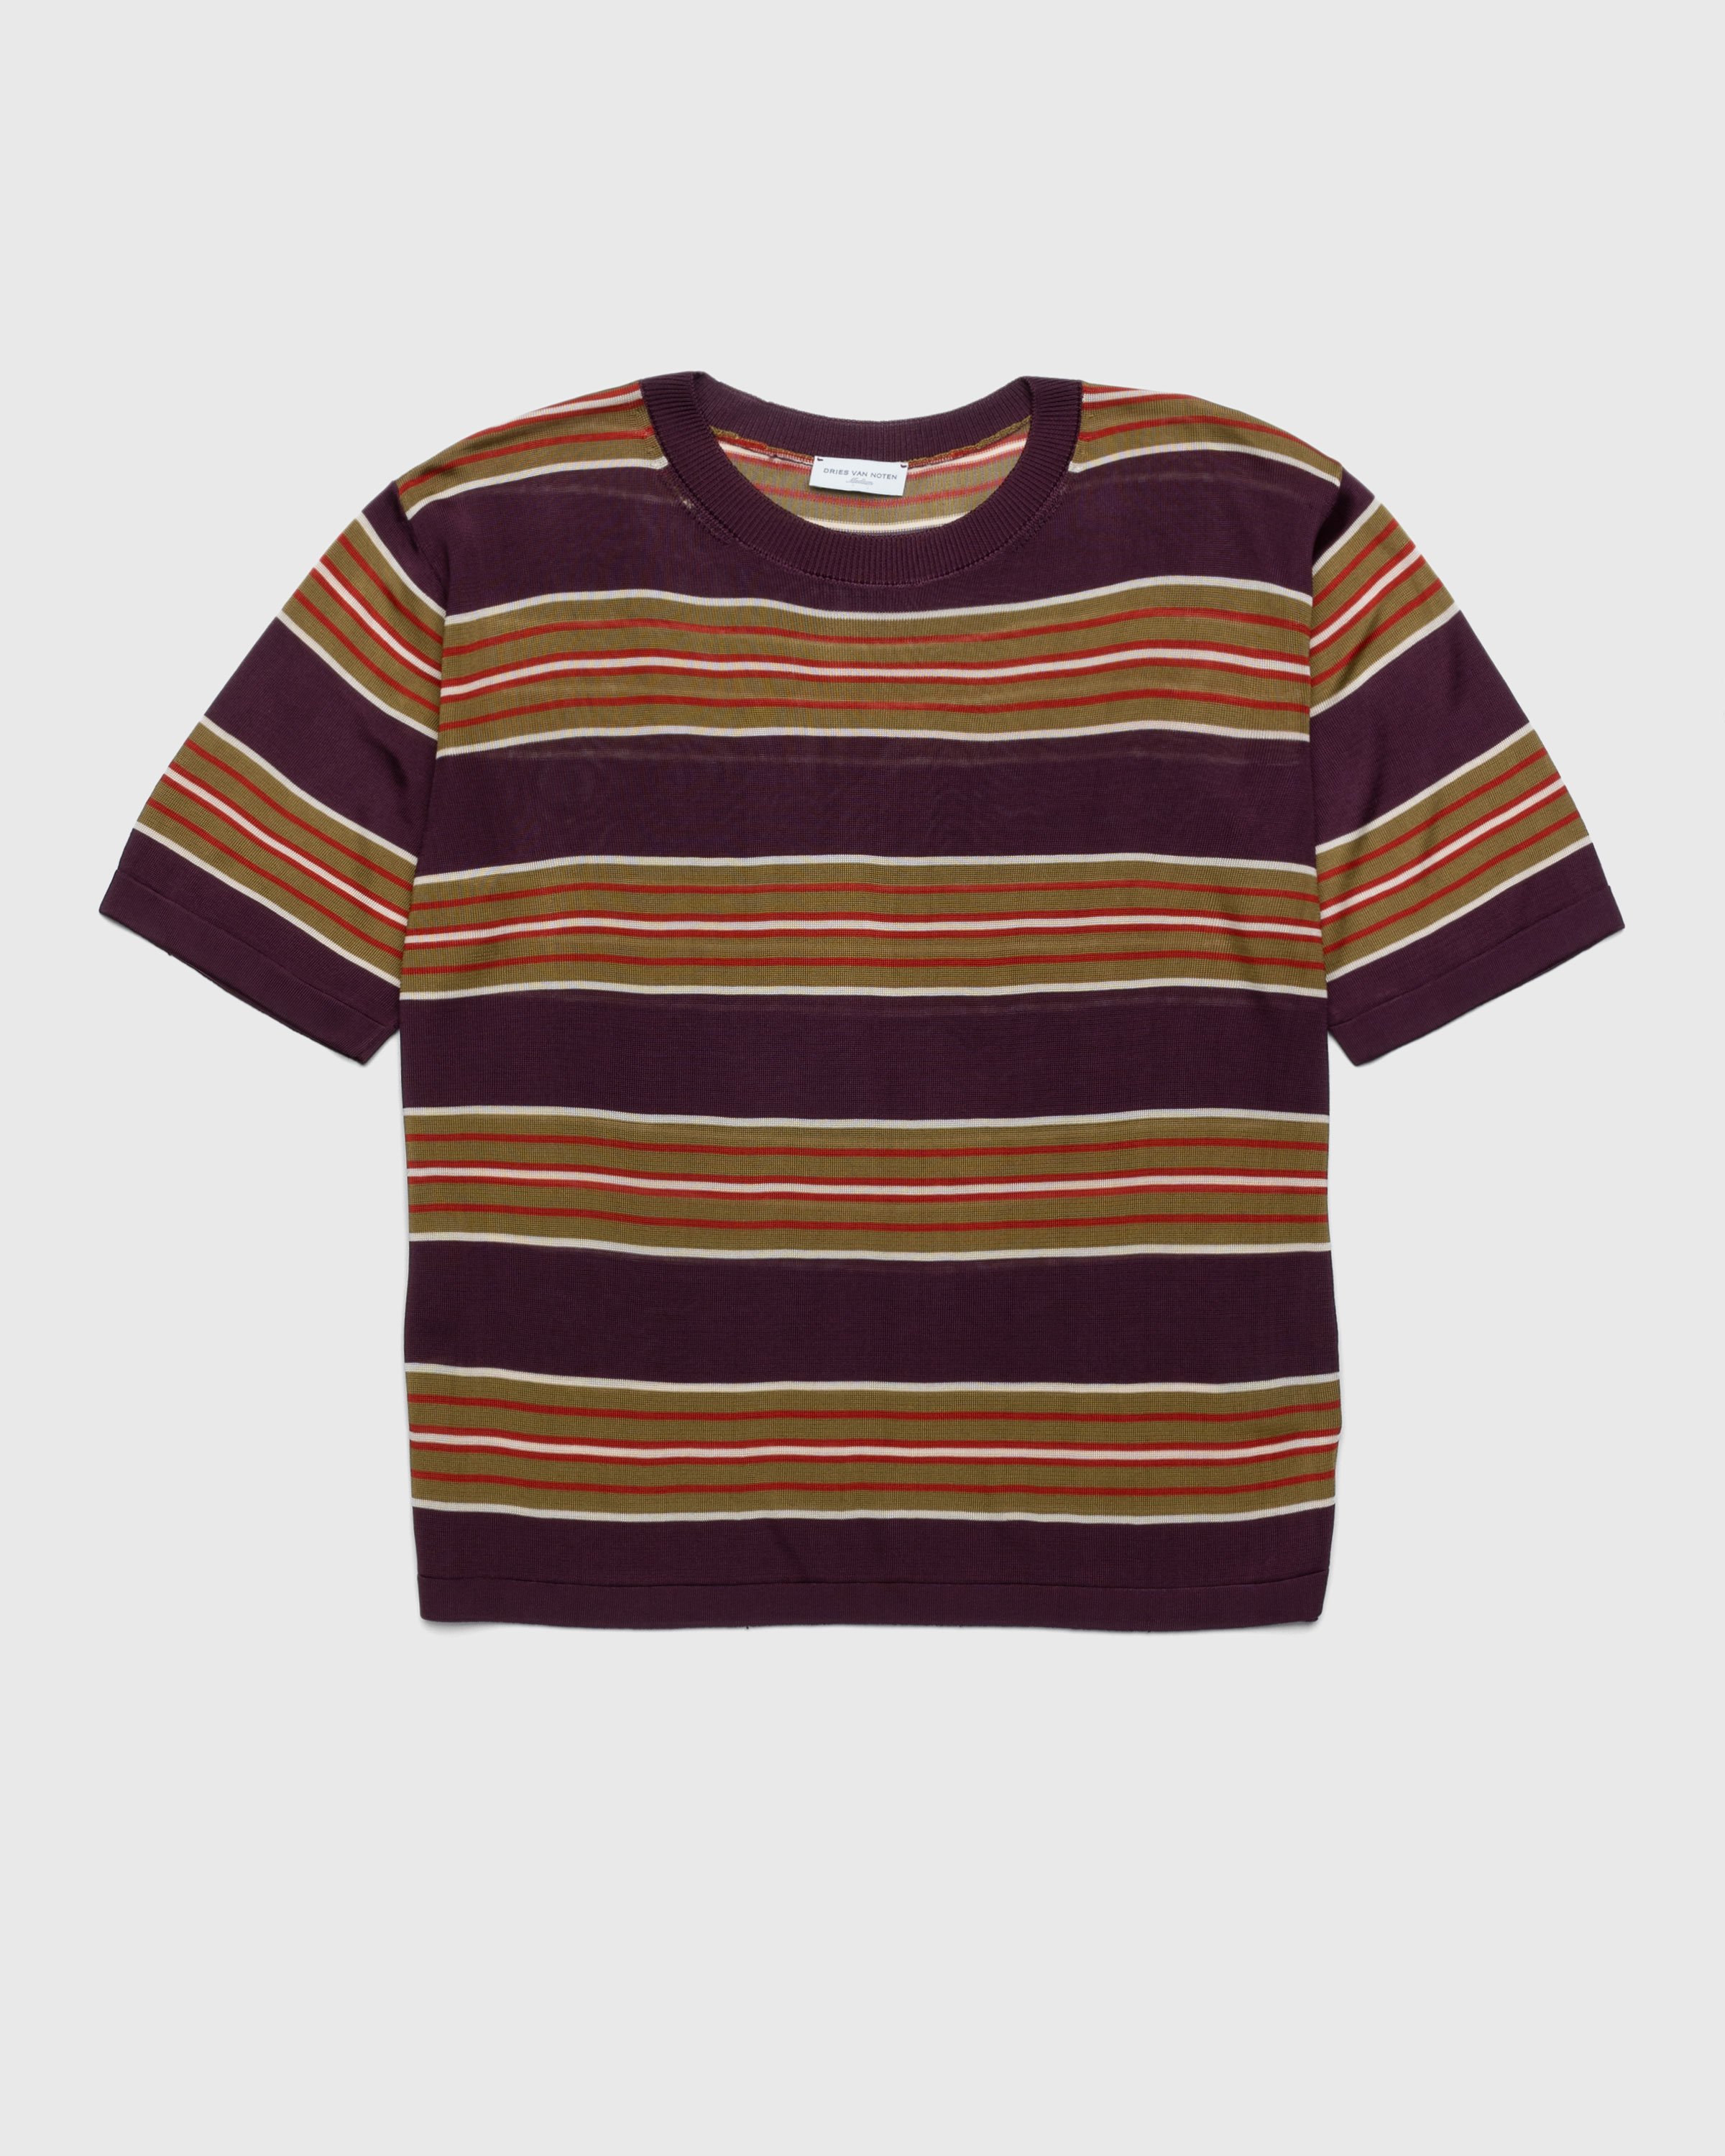 Dries van Noten - Mias Knit T-Shirt Burgundy - Clothing - Red - Image 1